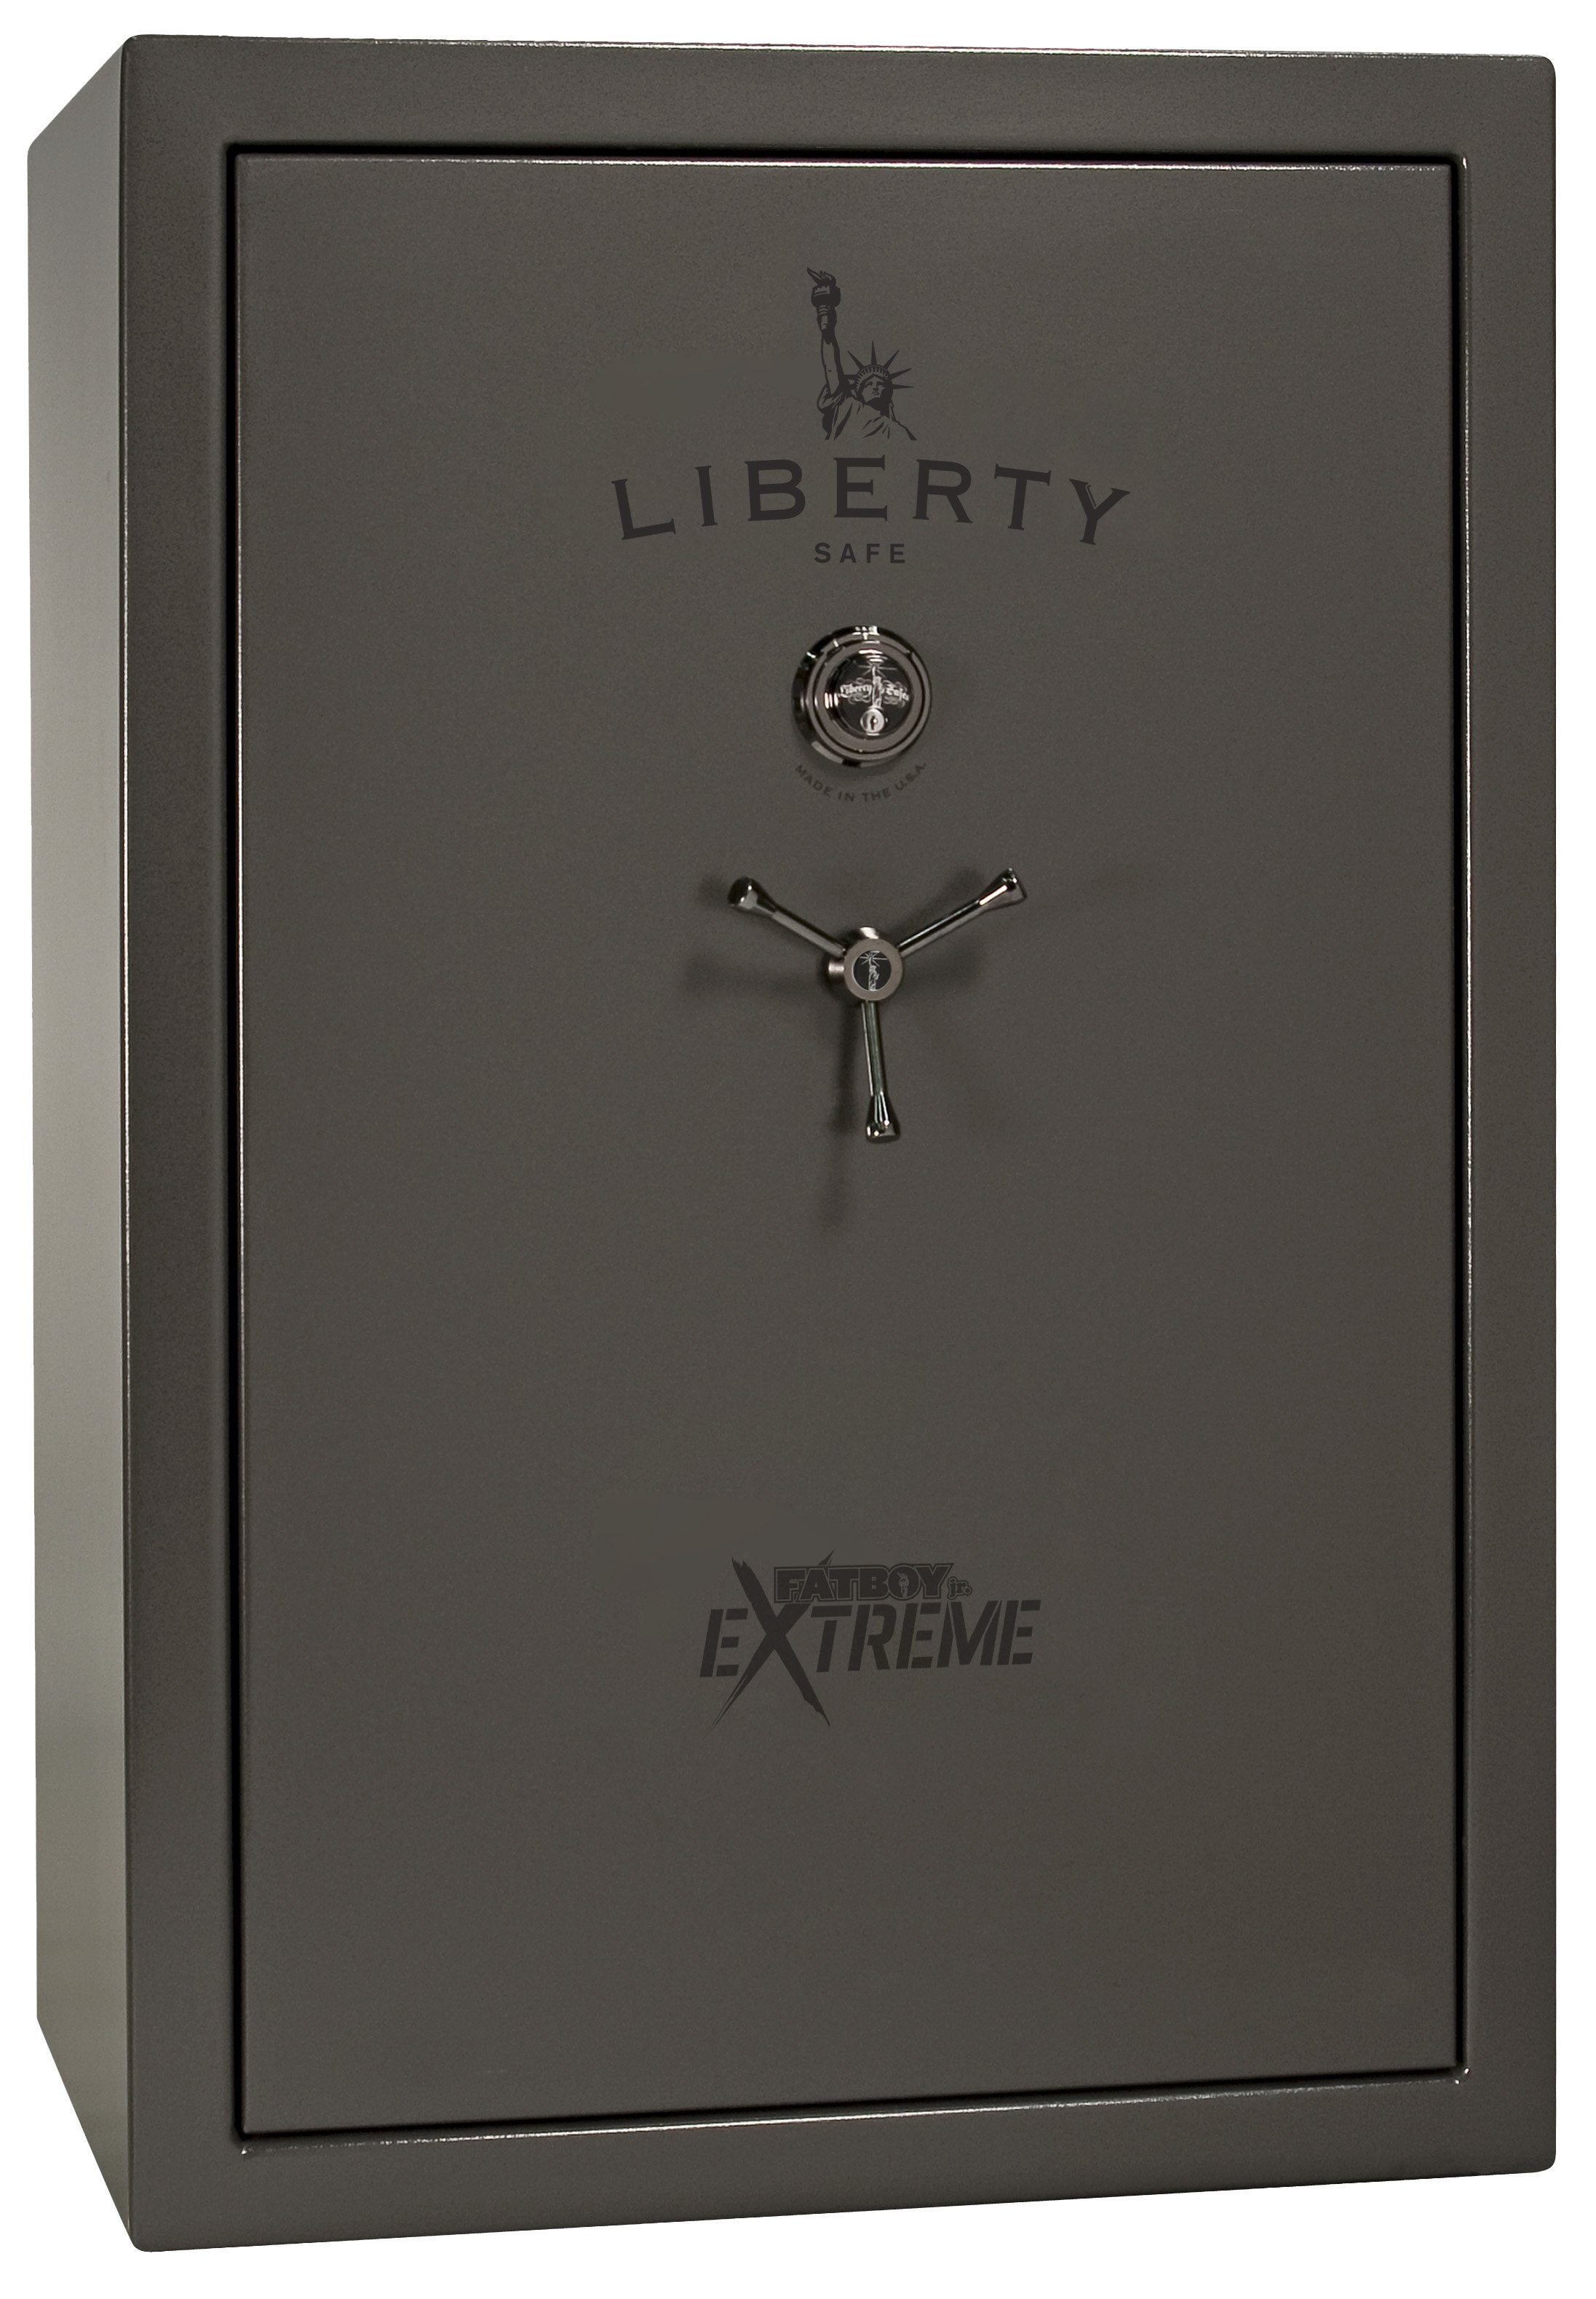 Liberty Fatboy Jr 48 Extreme Gun Safe with Mechanical Lock, photo 7